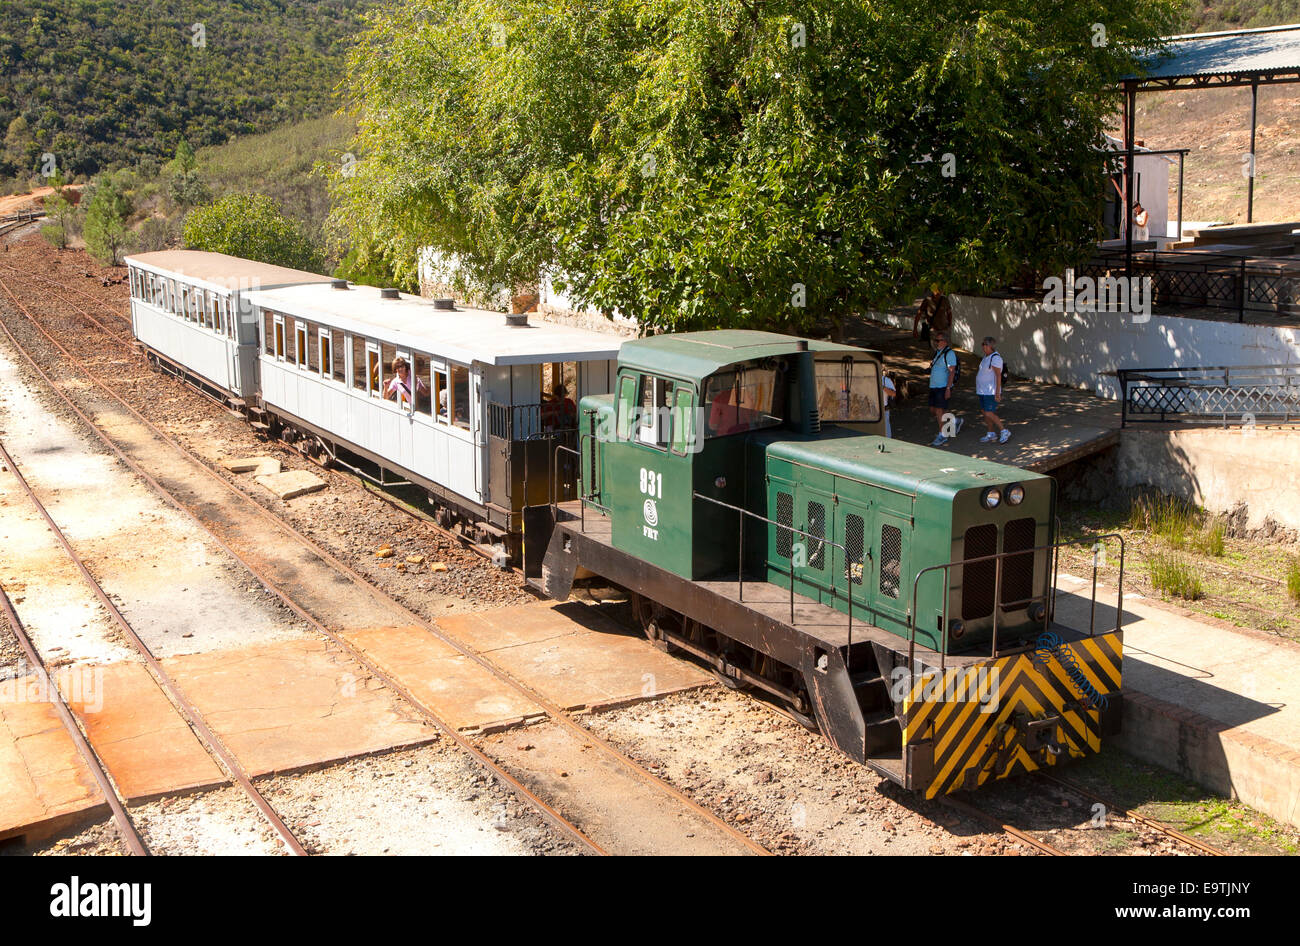 Antiguo tren a vapor usado para viaje turístico a través de la zona minera de Rio Tinto, provincia de Huelva, España Foto de stock